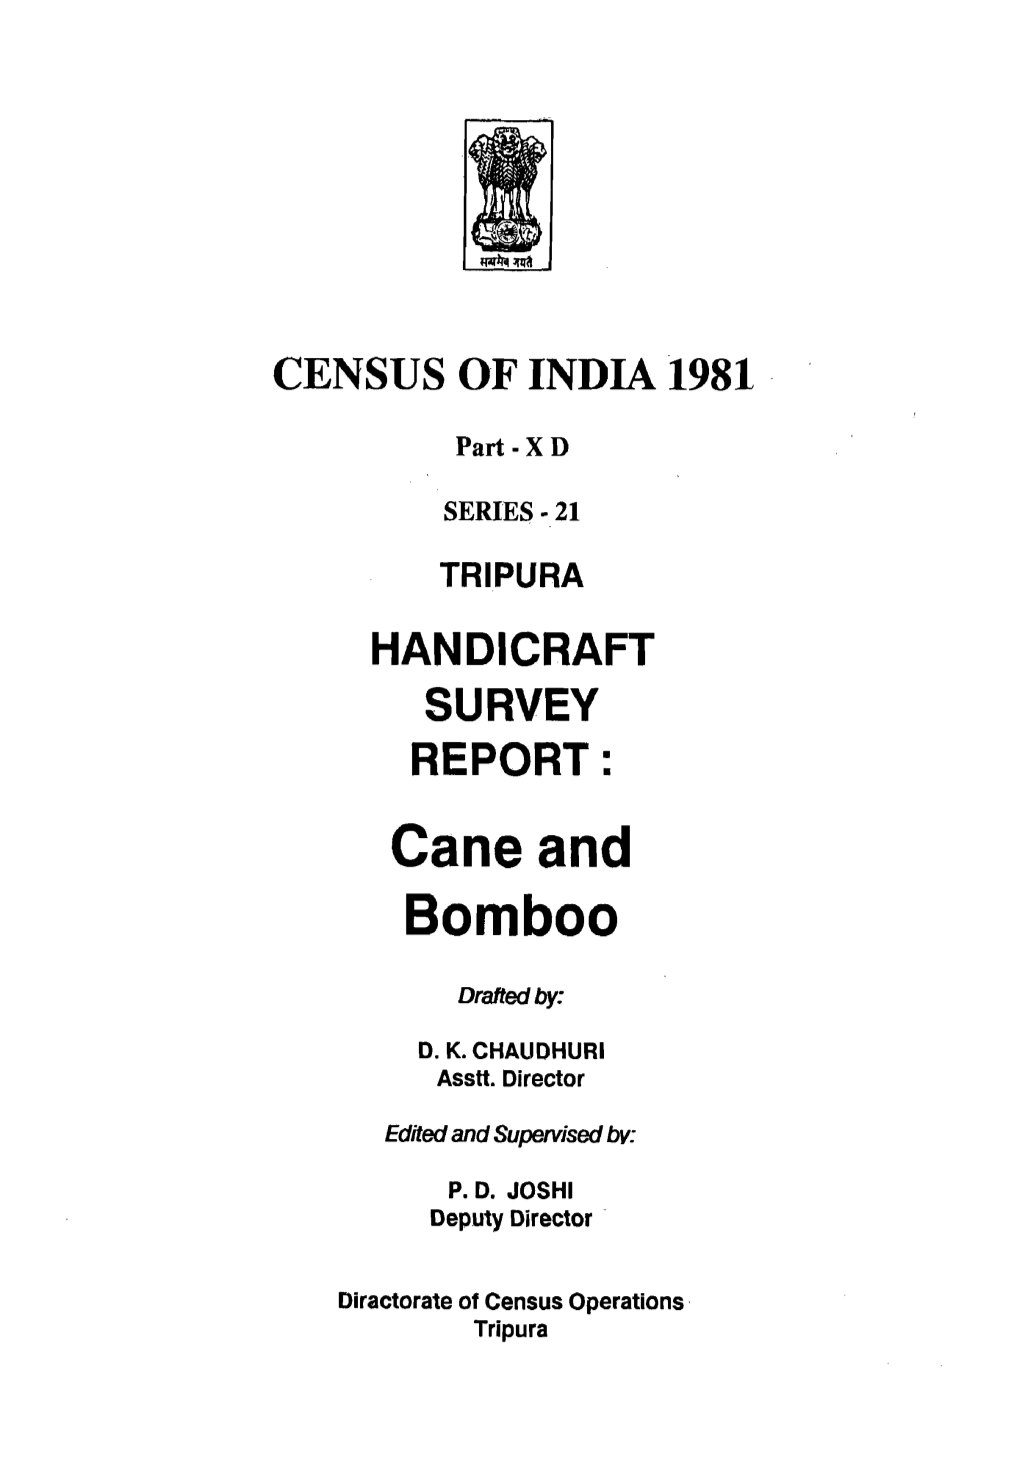 Handicraft Survey Report, Cane and Bomboo, Part XD, Series-21, Tripura